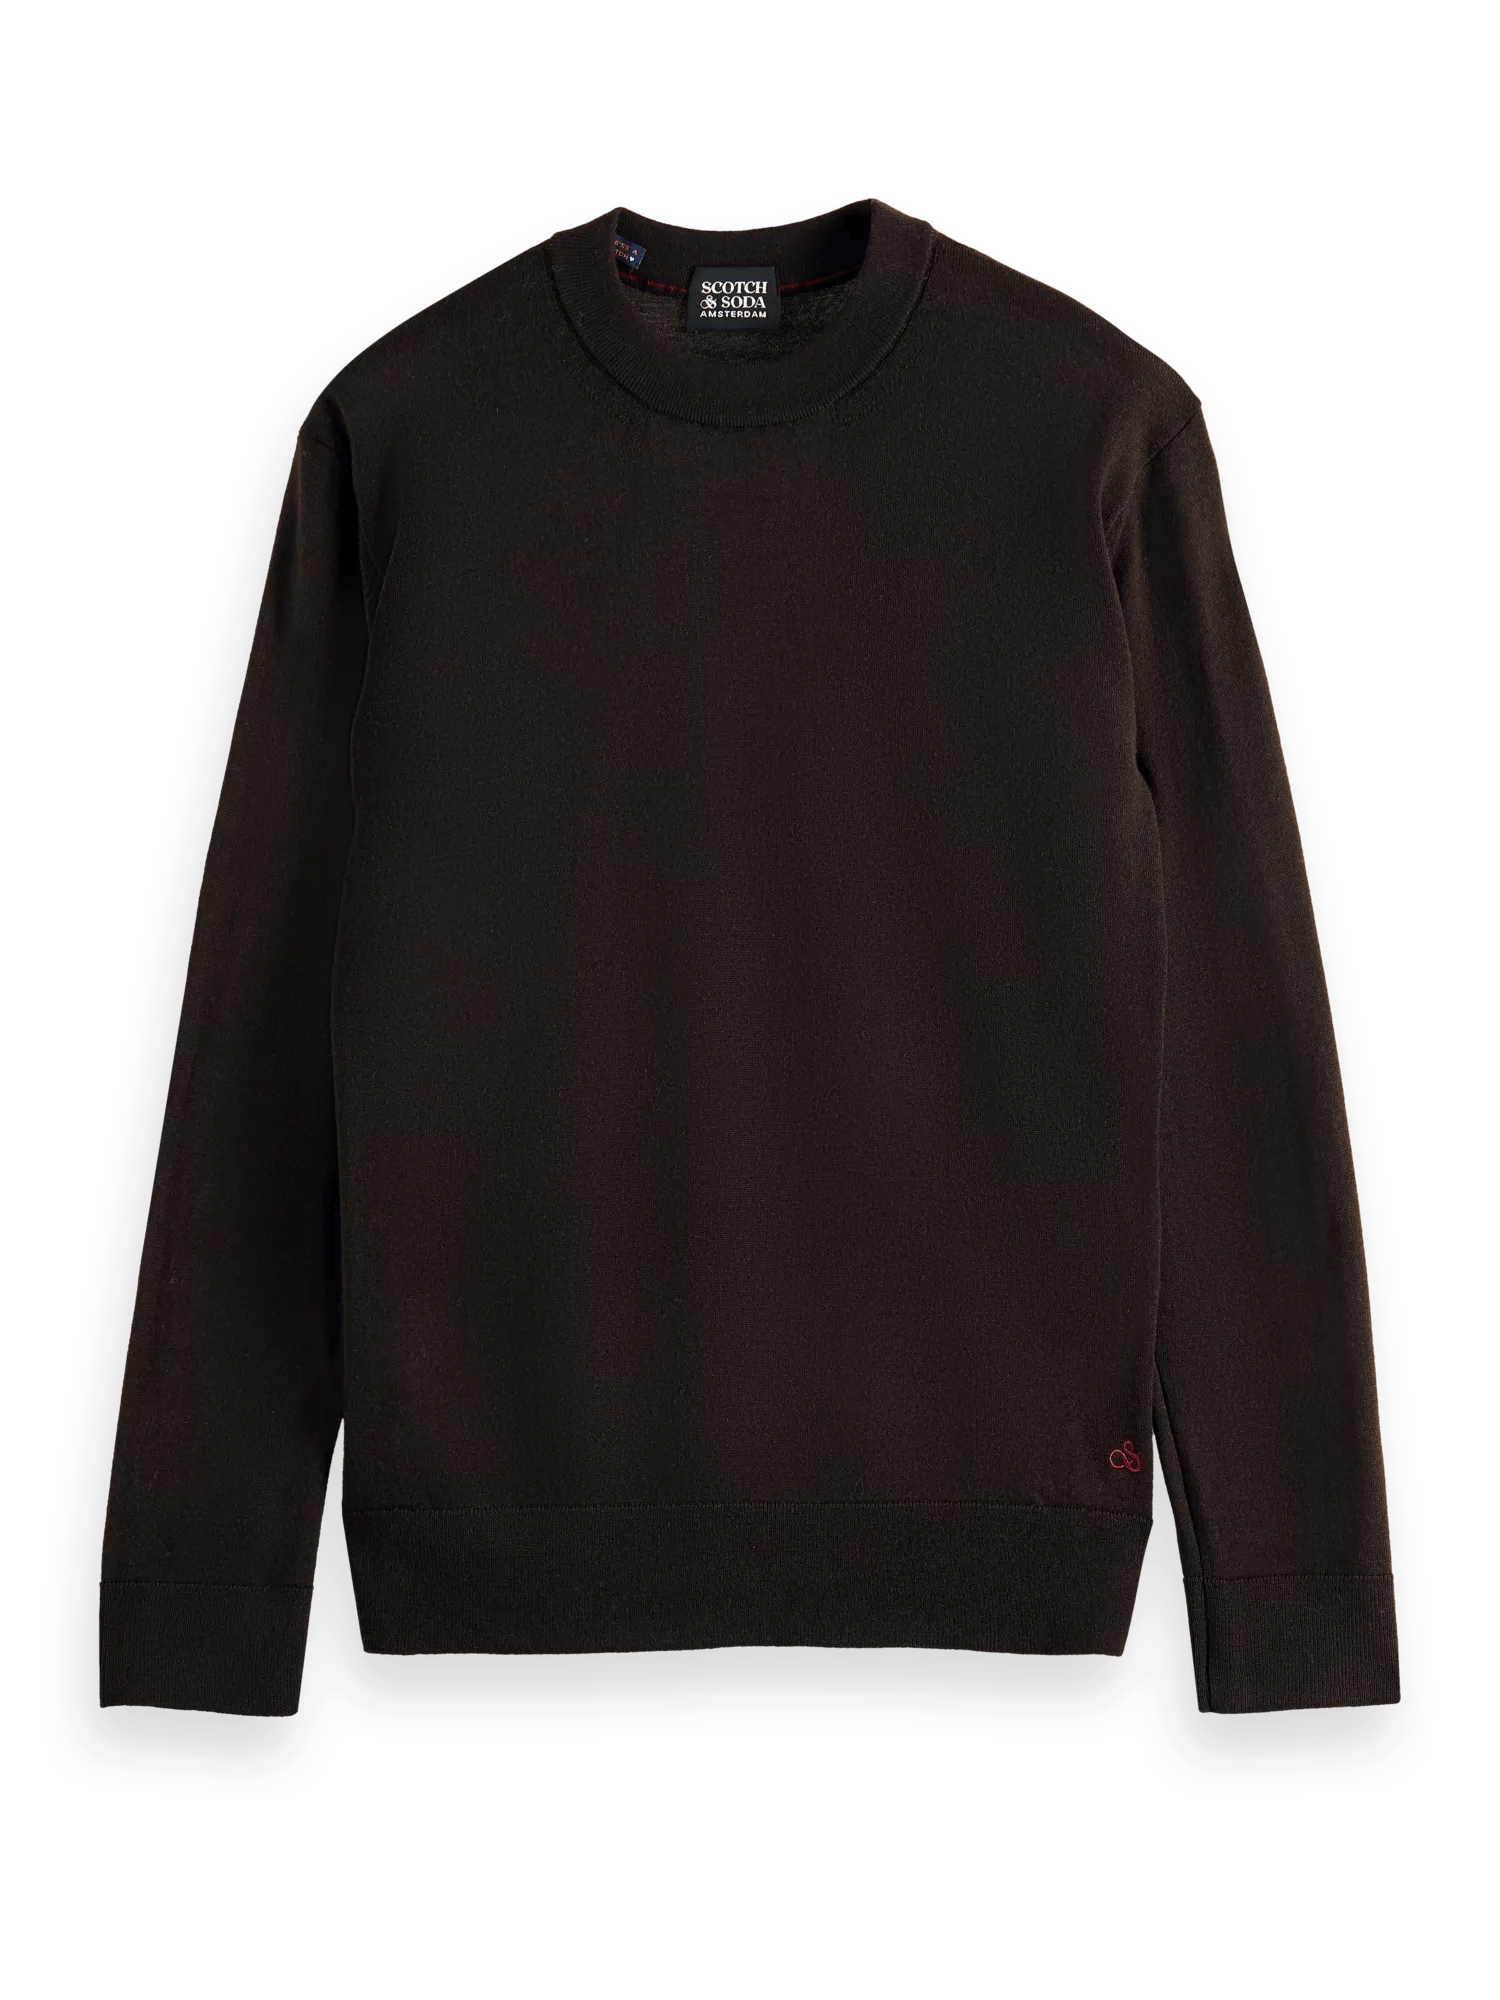 Scotch & Soda Merino wool crewneck sweater FNT